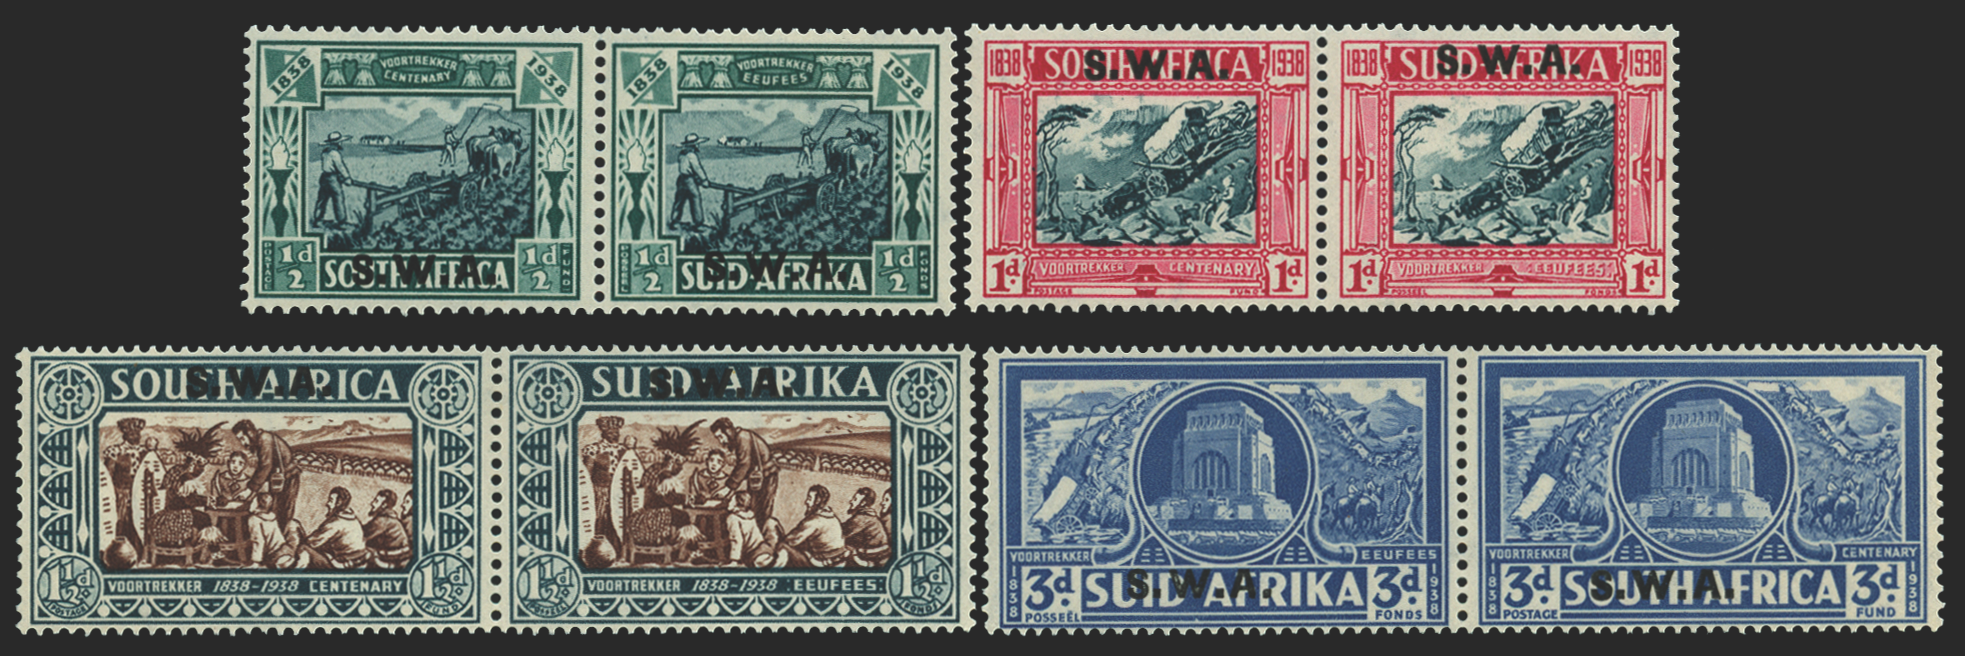 SOUTH WEST AFRICA 1938 Voortrekker set of 4 to 3d + 3d, SG105/8